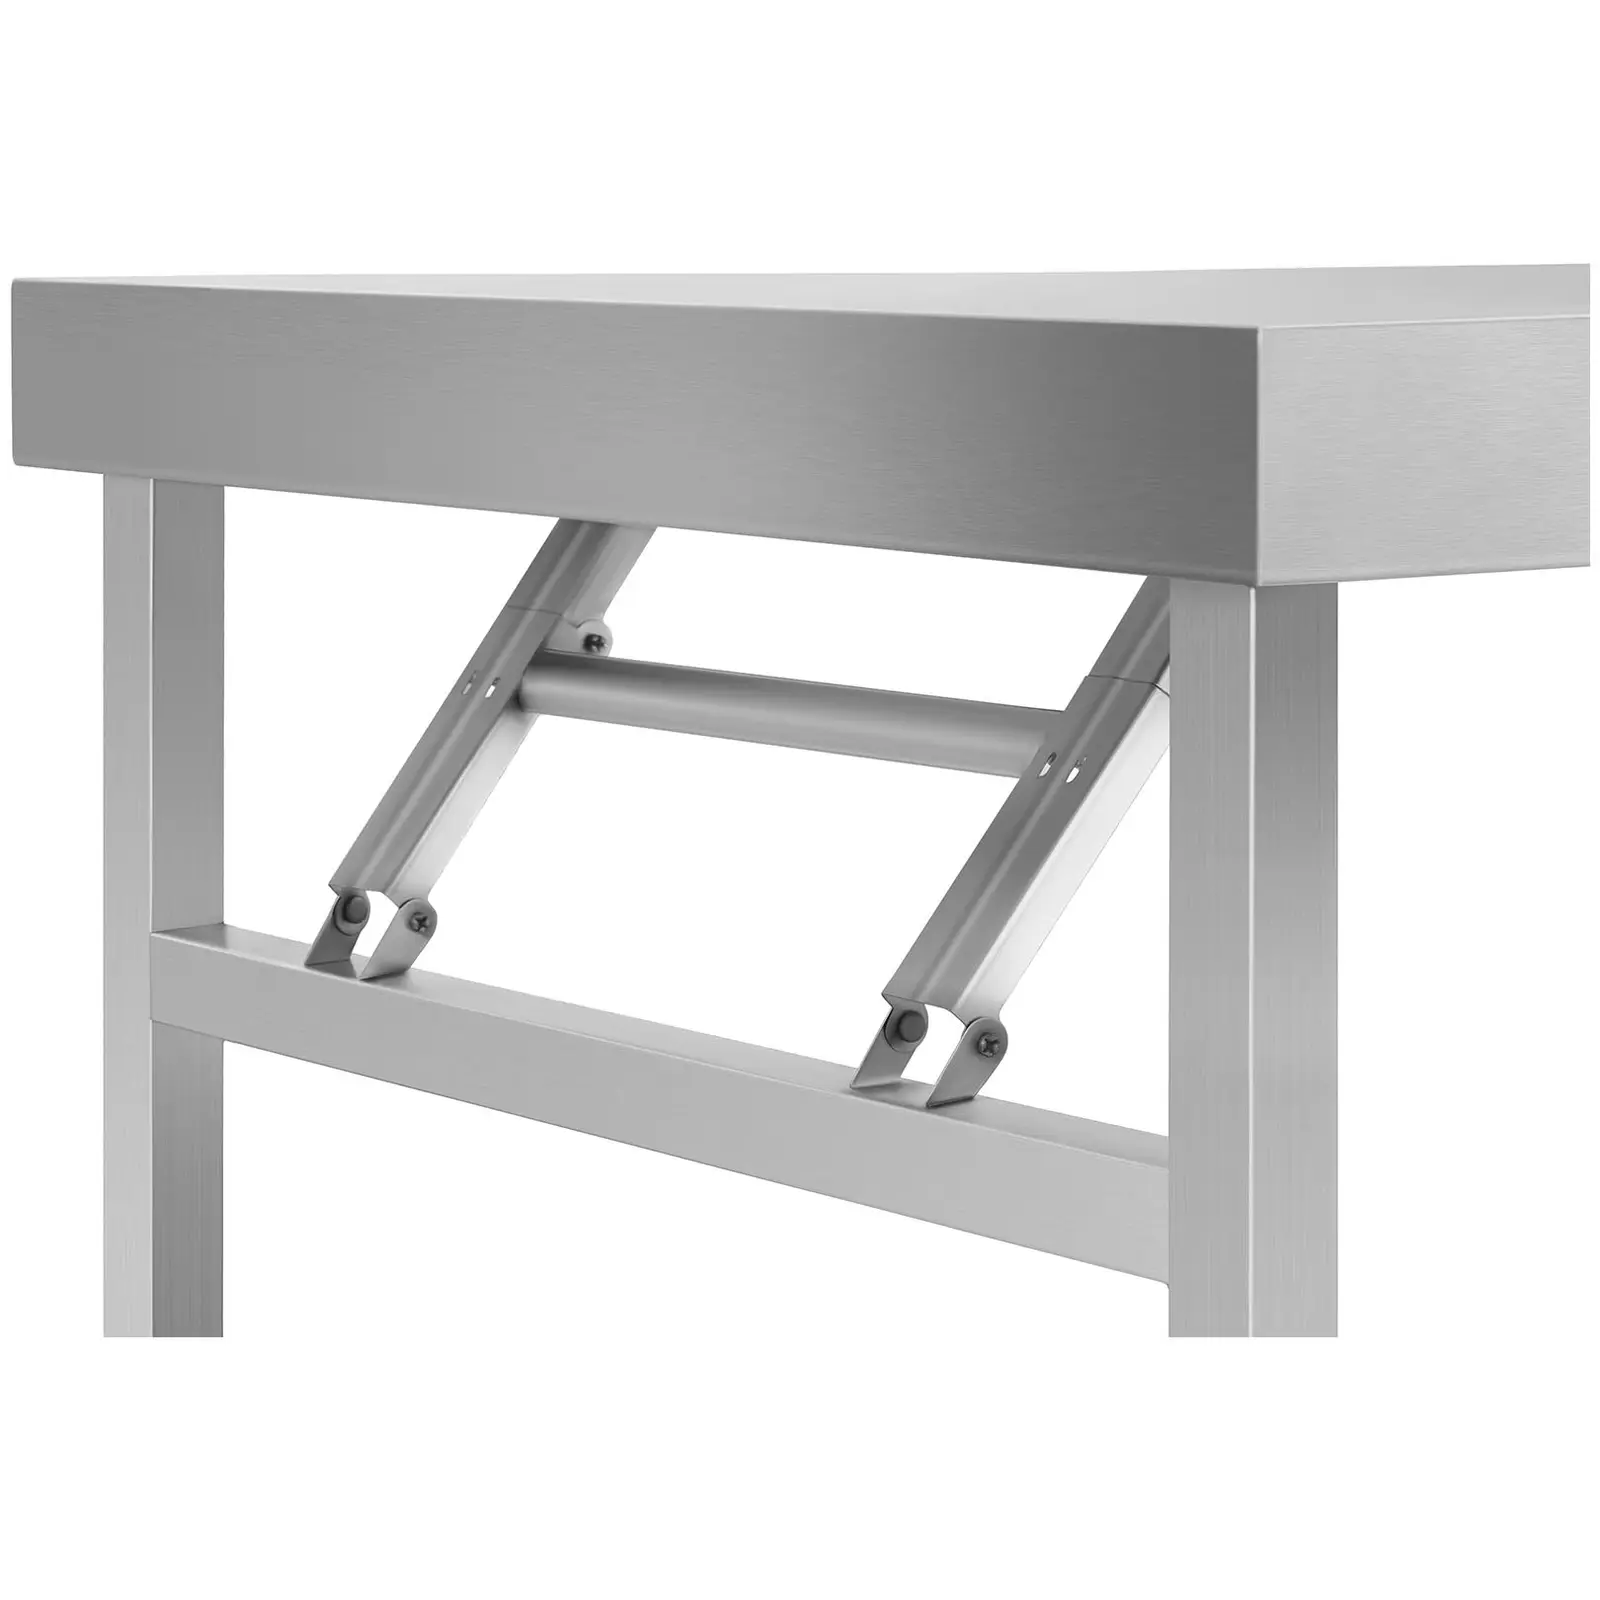 Folding Work Table - 60 x 180 cm - 230 kg load capacity